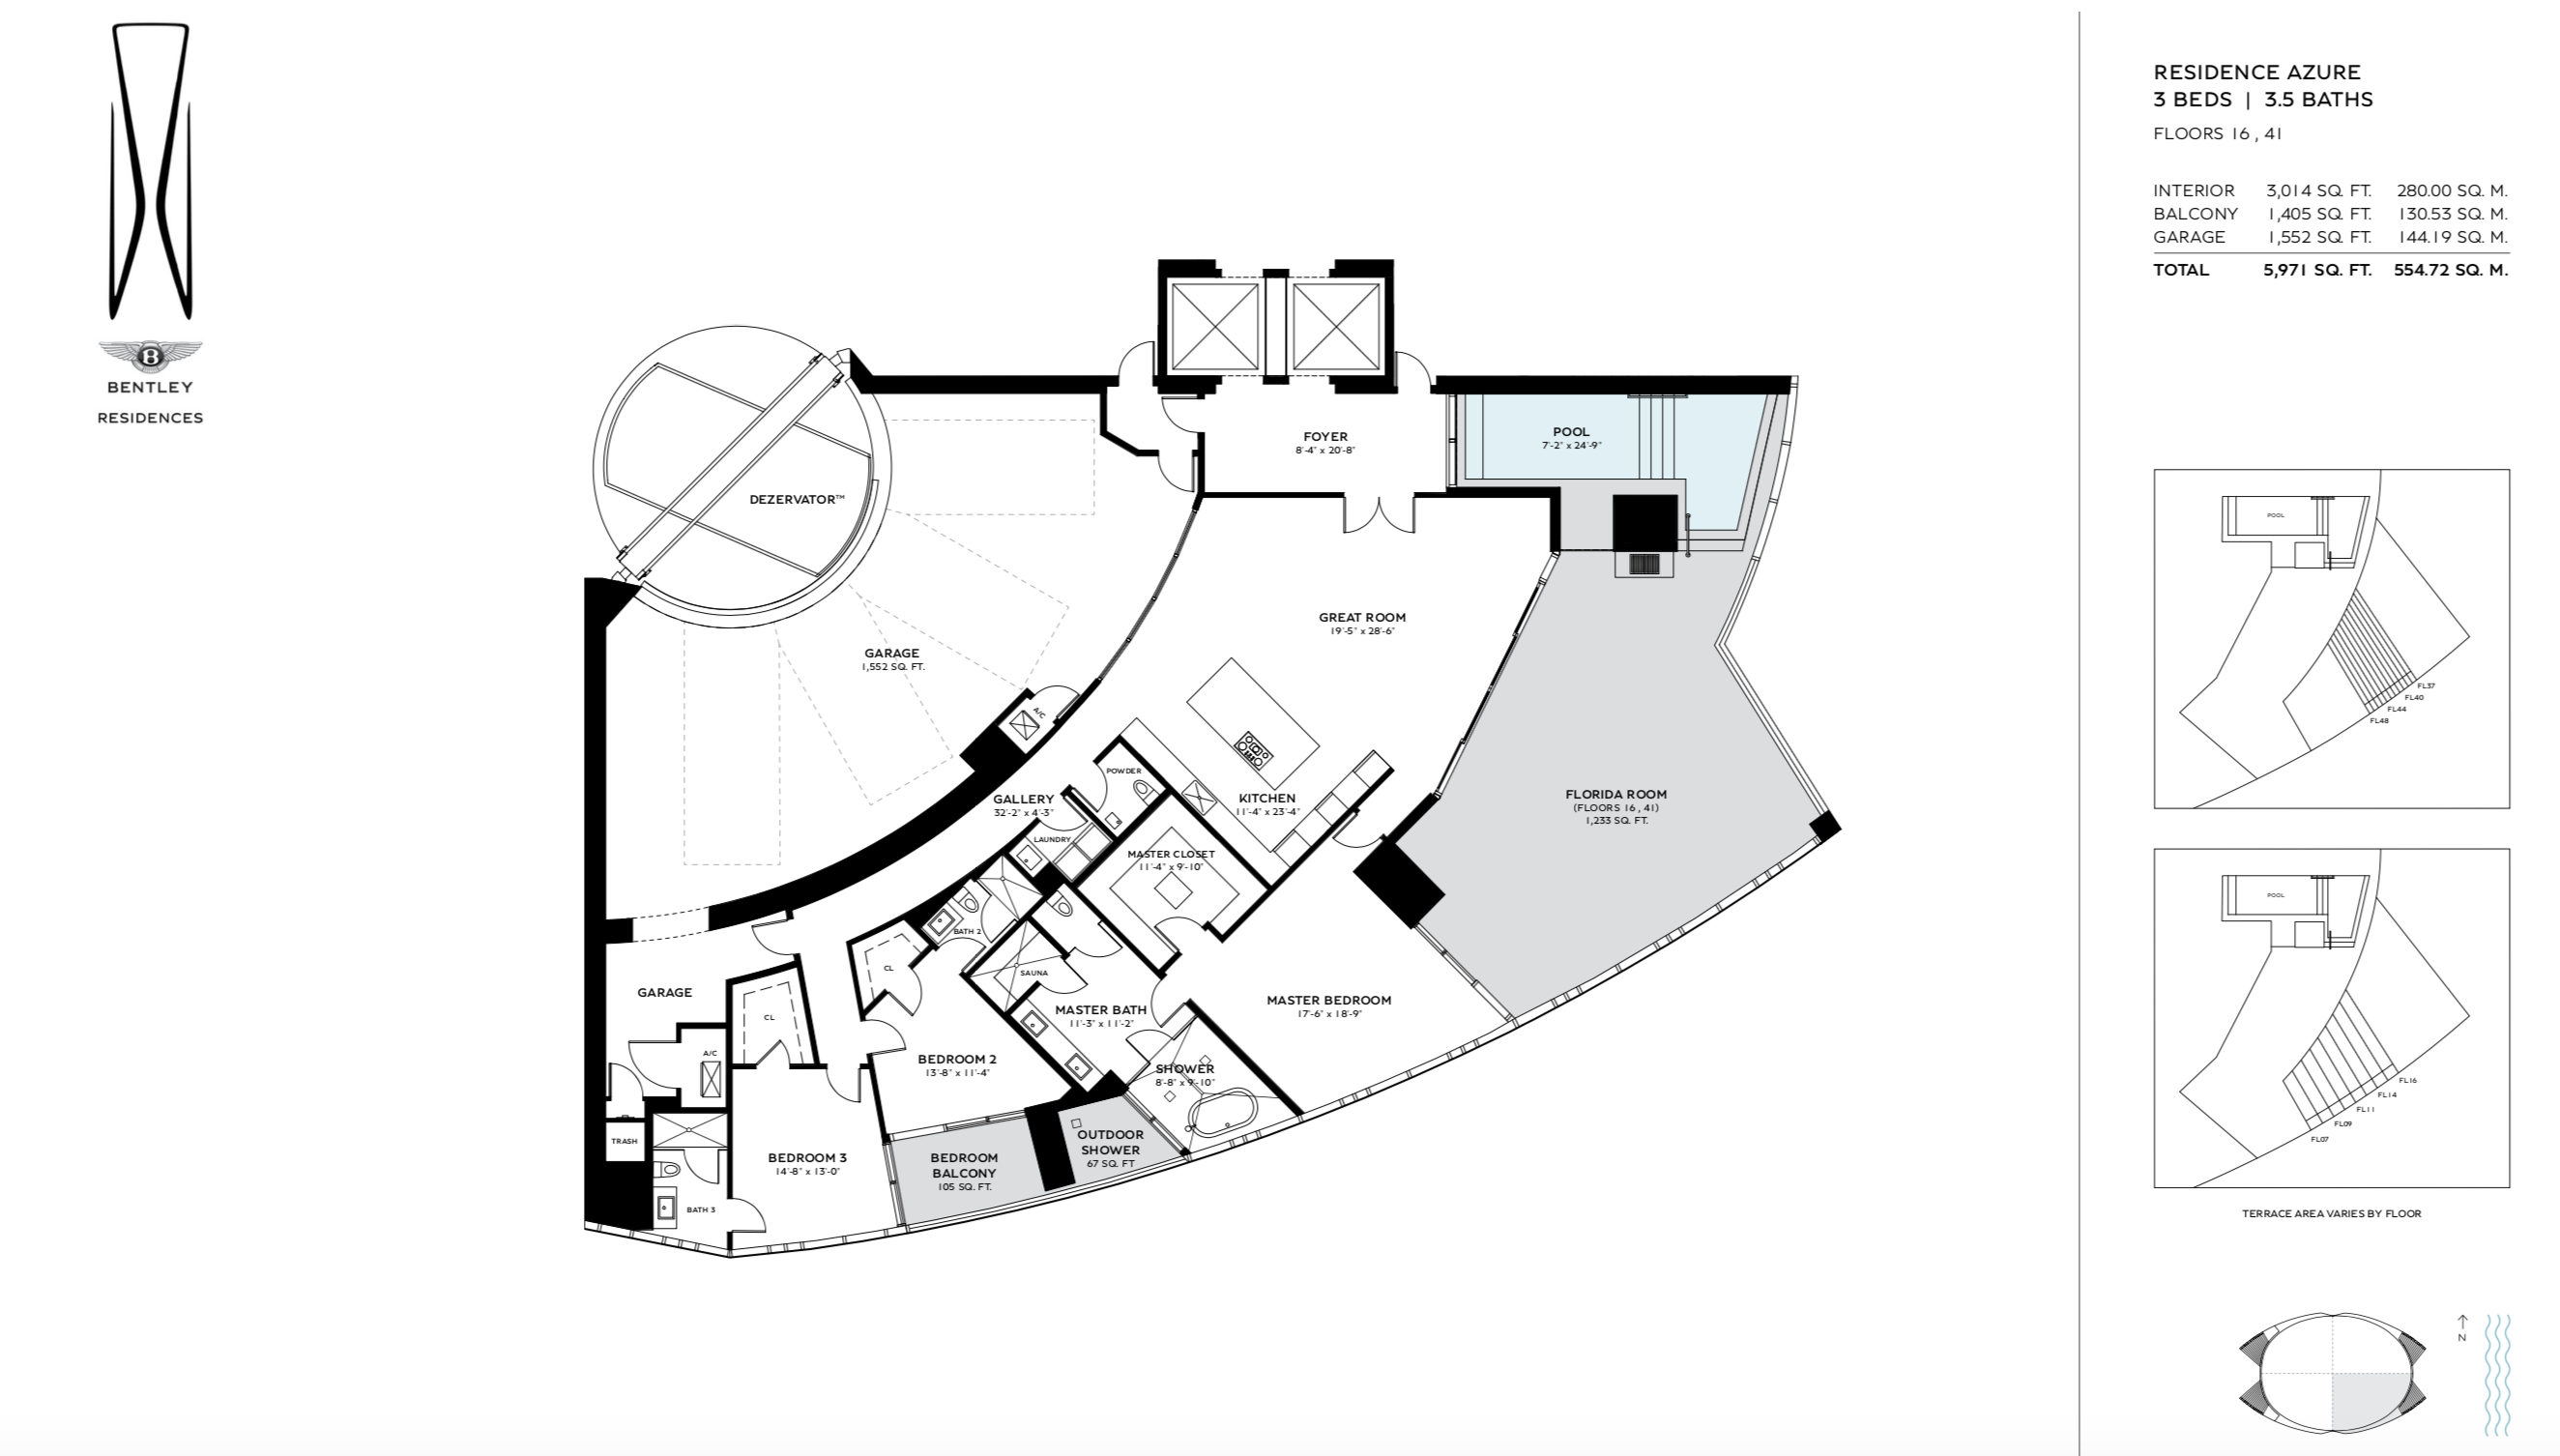 Bentley Residences Sunny Isles  | Residence Azure | SE Exposure | 3 Be/3.5Ba | 3,014 SF | Floors 16 & 41